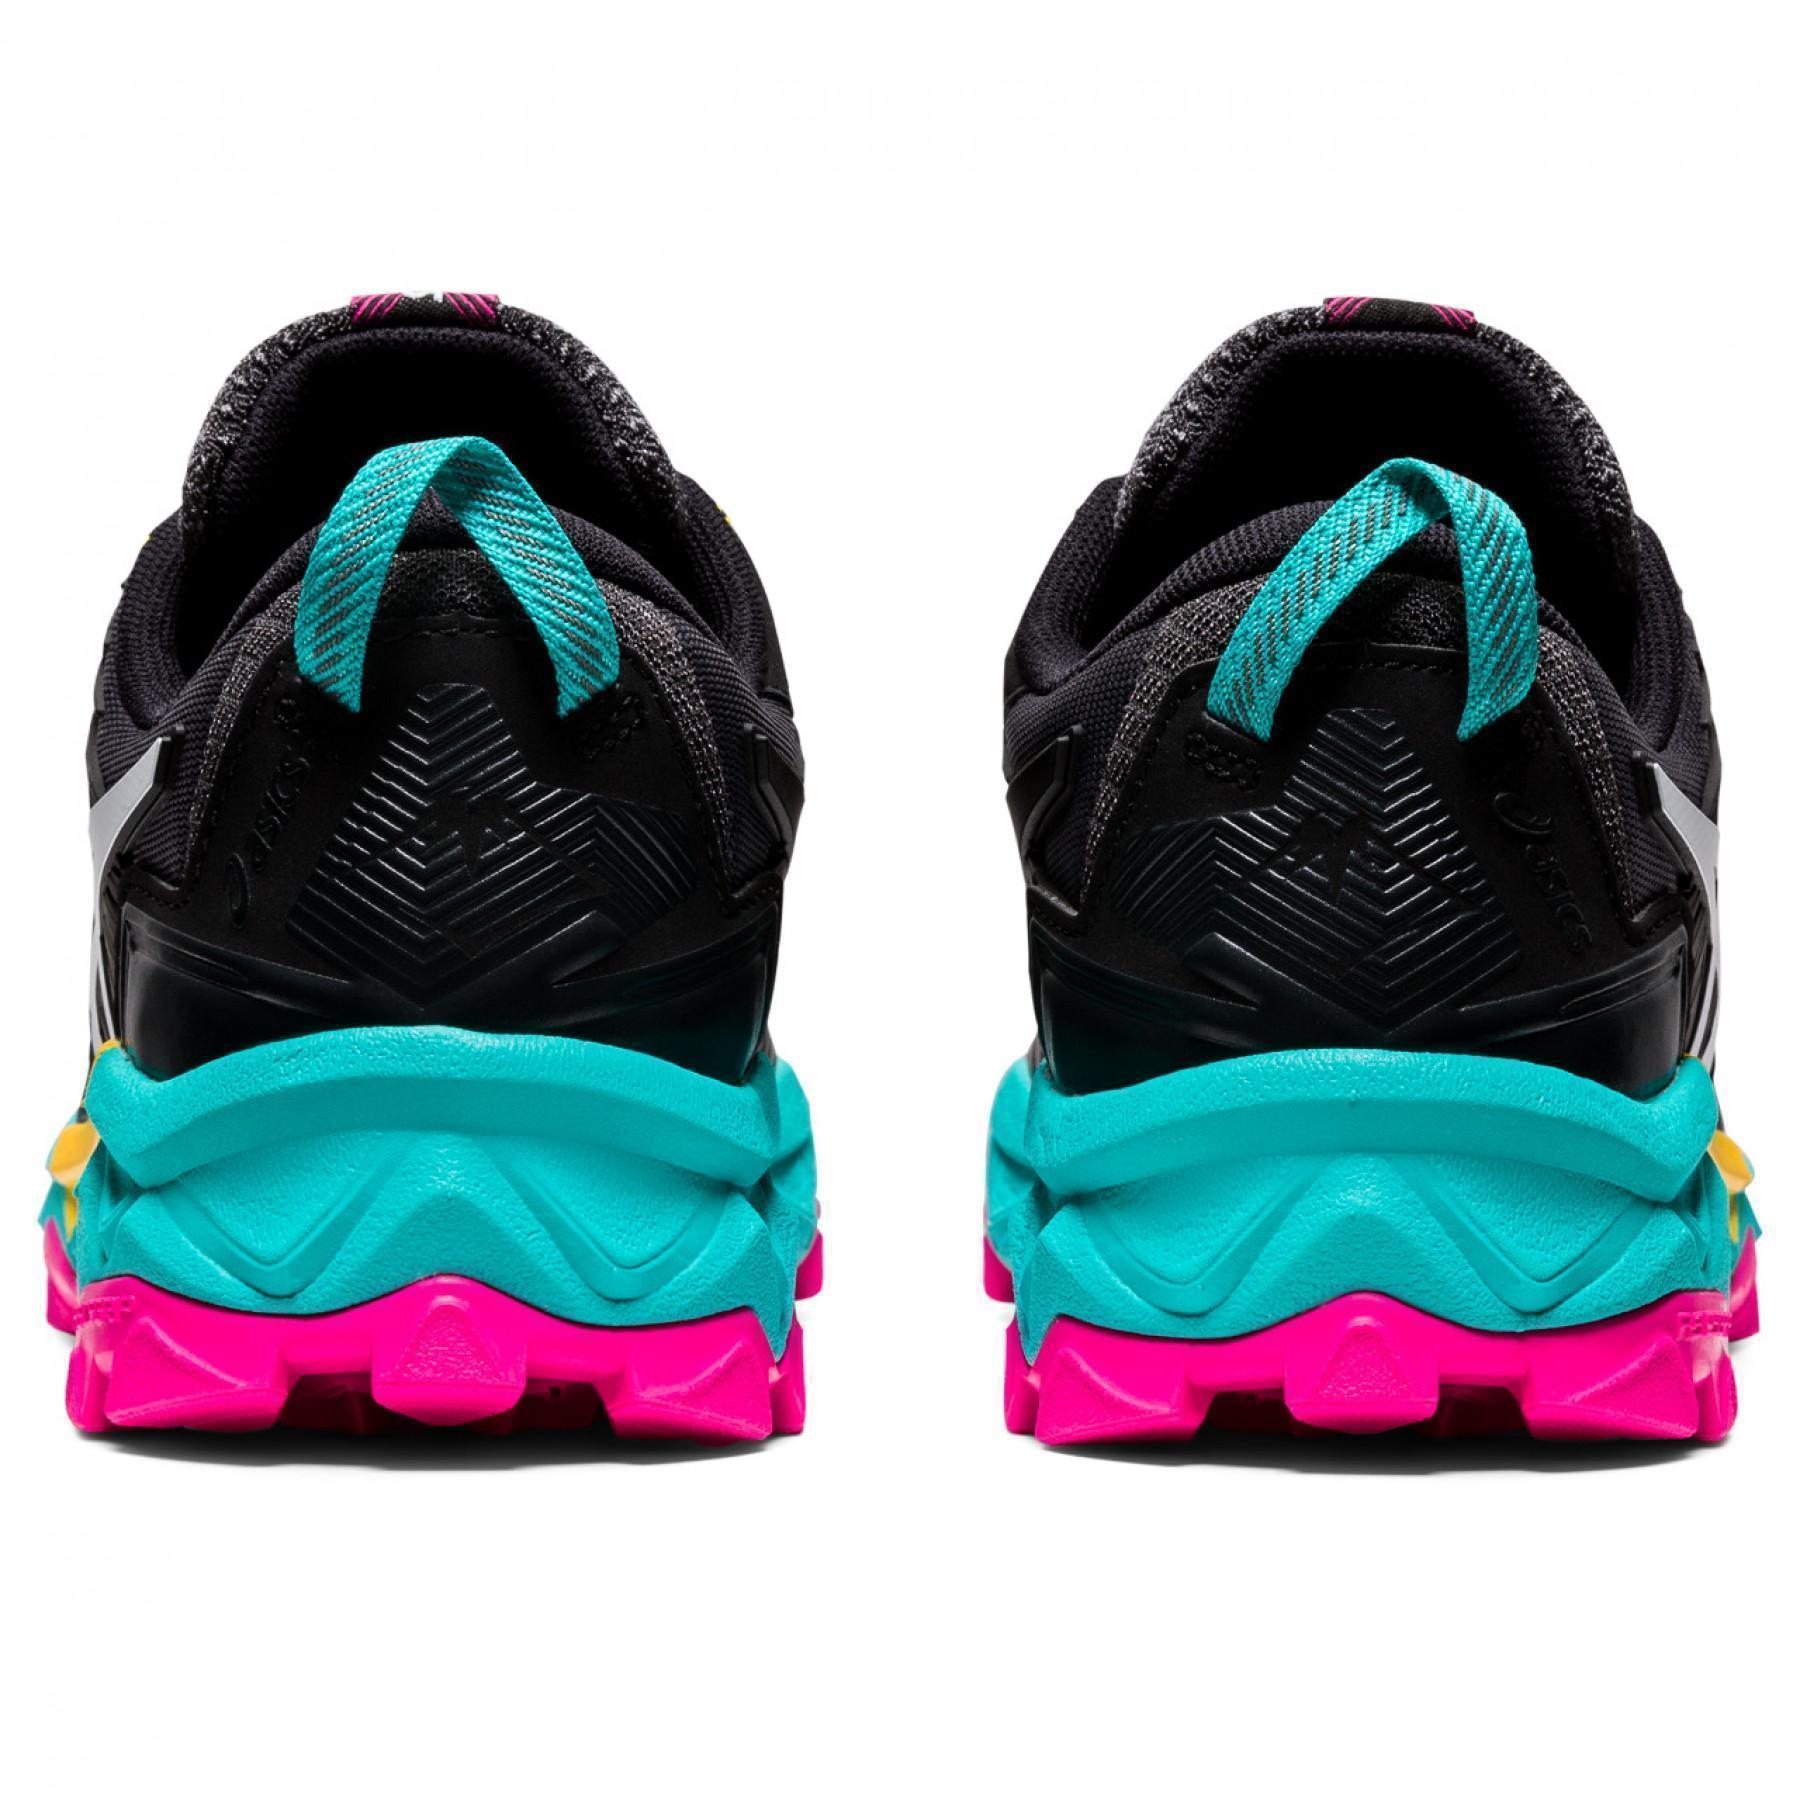 Chaussures de trail femme Asics Gel-Fujitrabuco 8